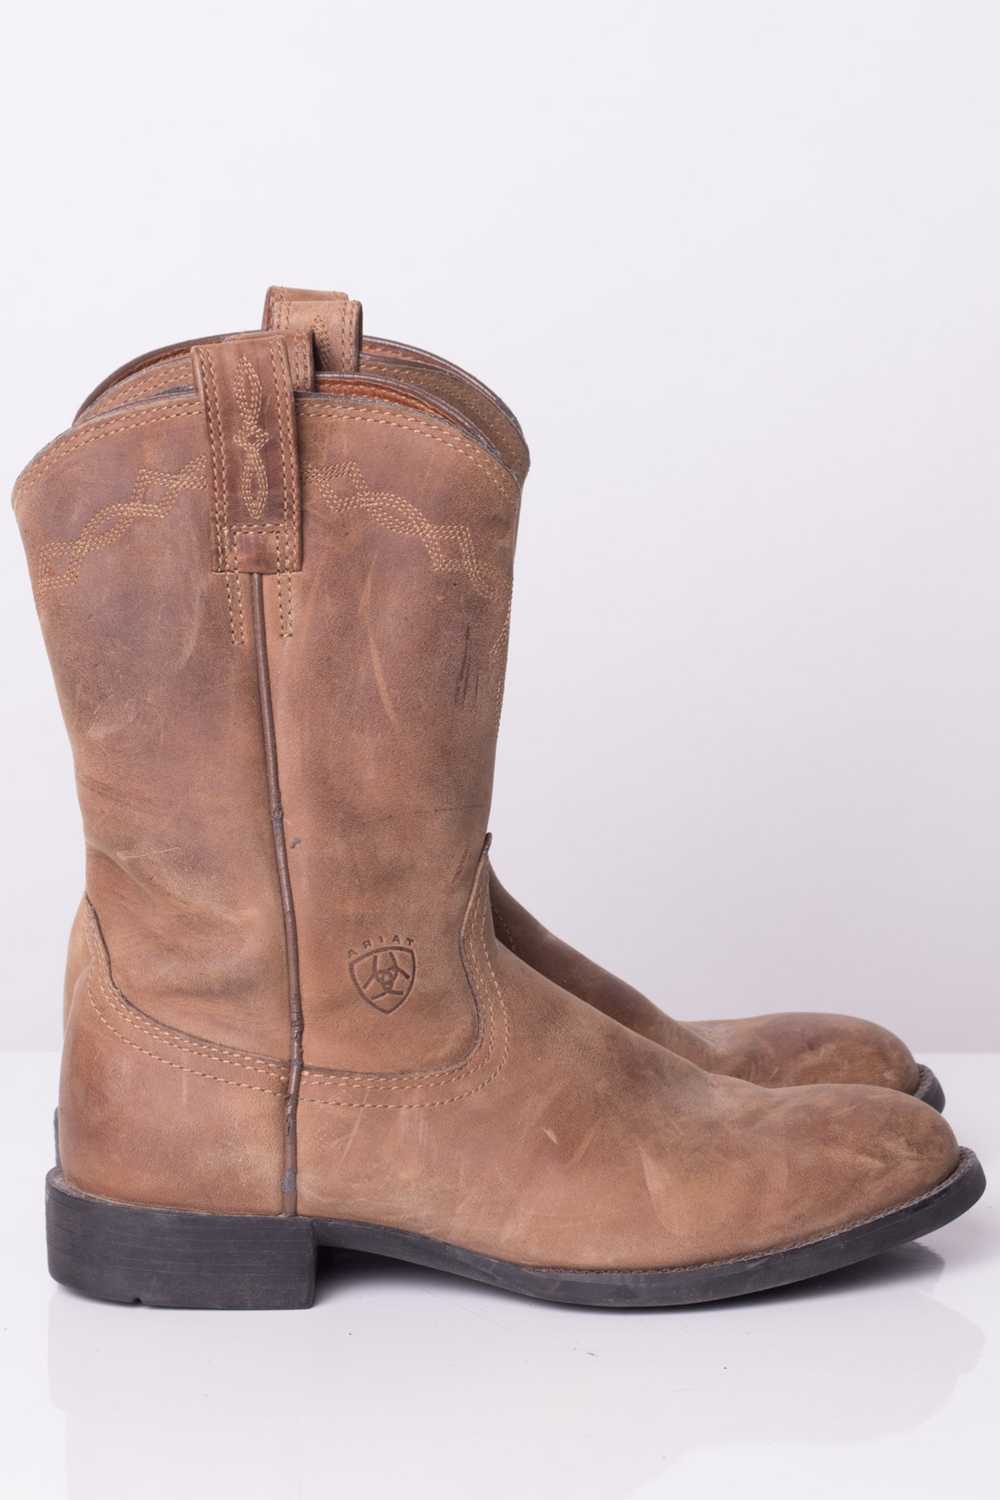 Brown Ariat Cowboy Boots (6.5 B) - image 1